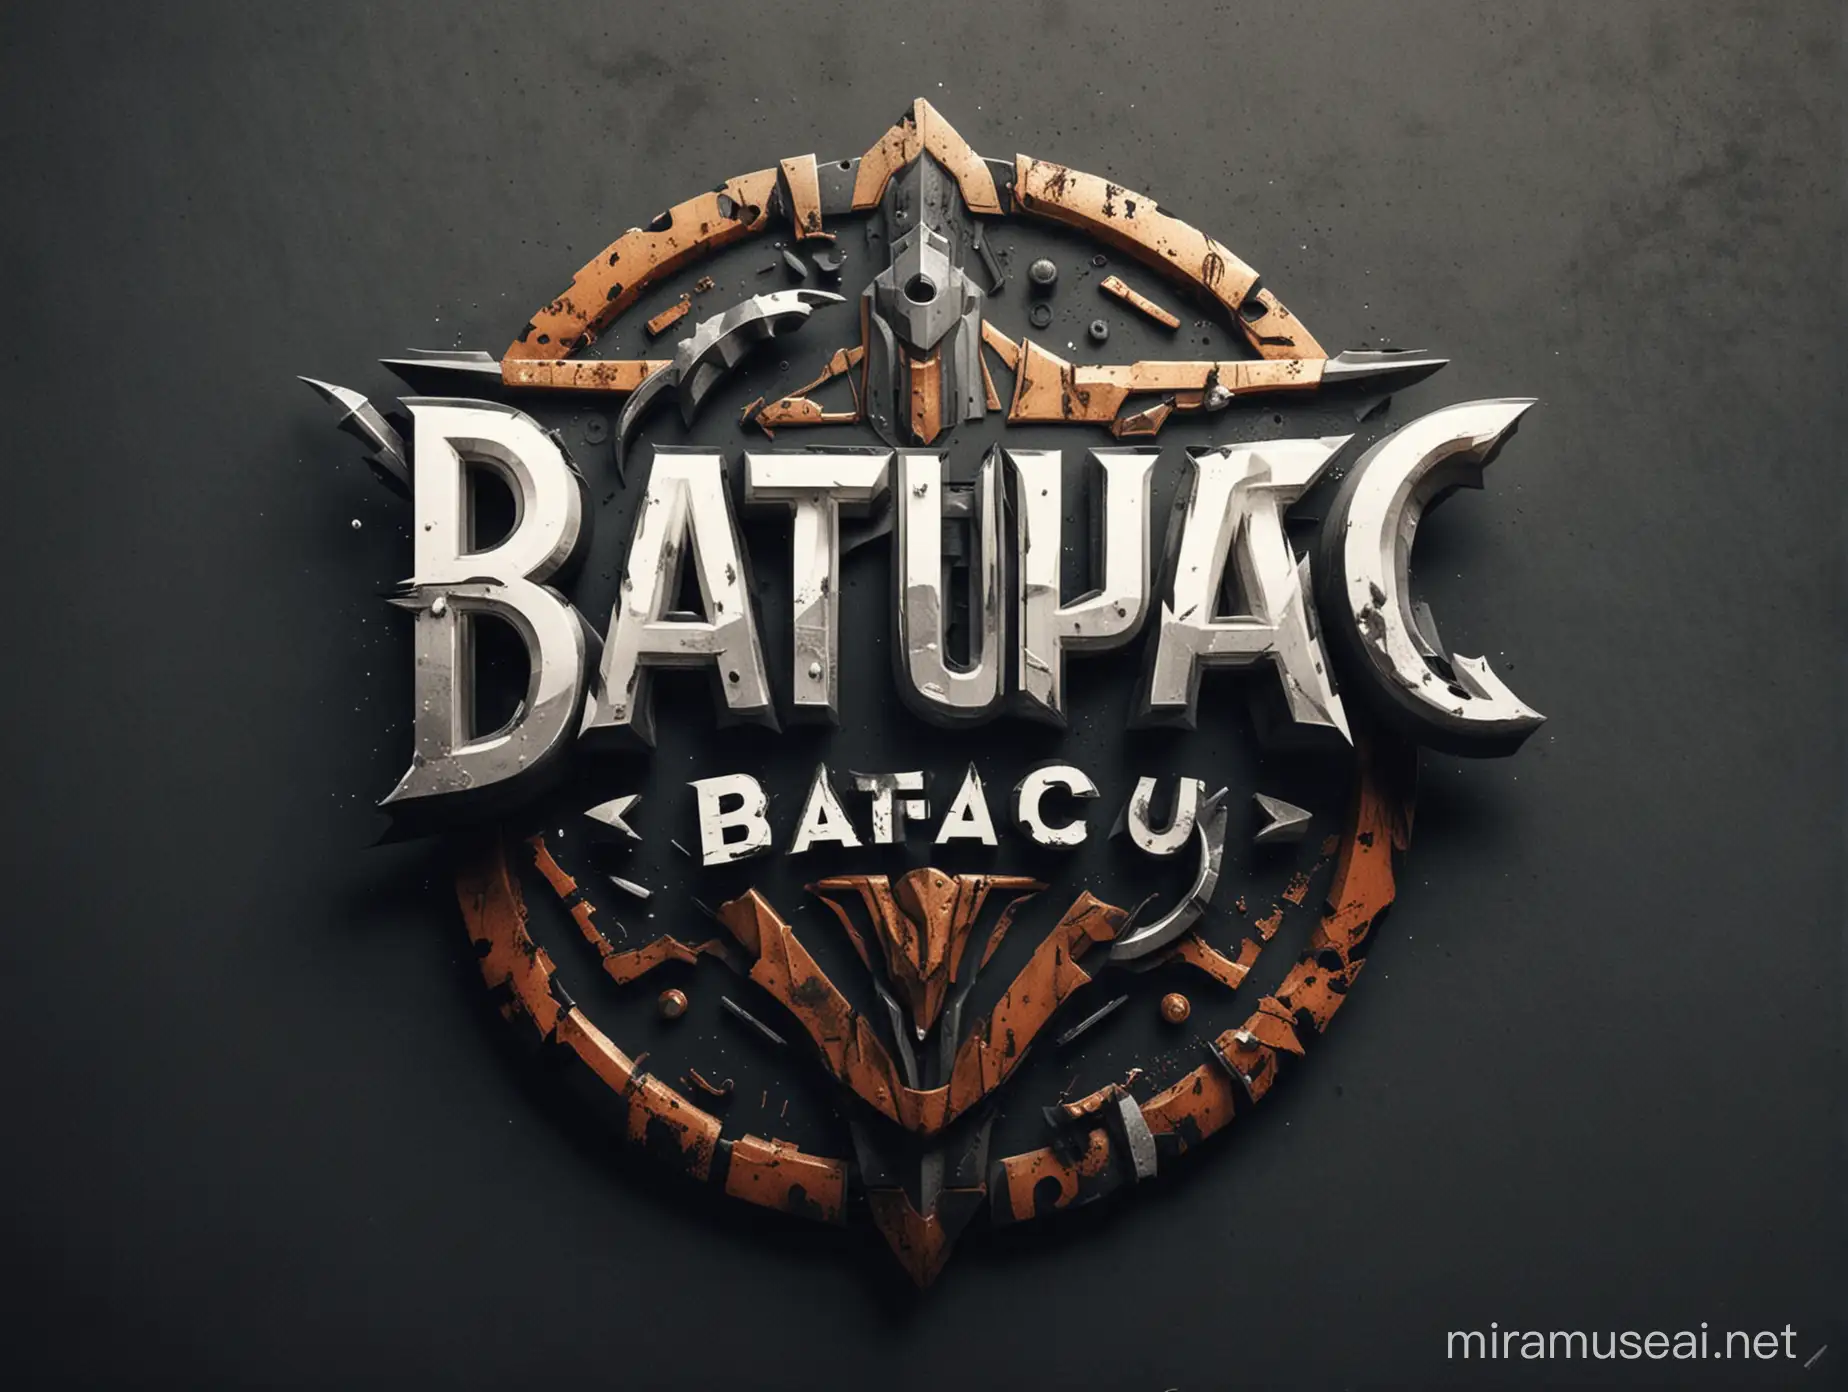 Mechanical Logo Design for Batupac